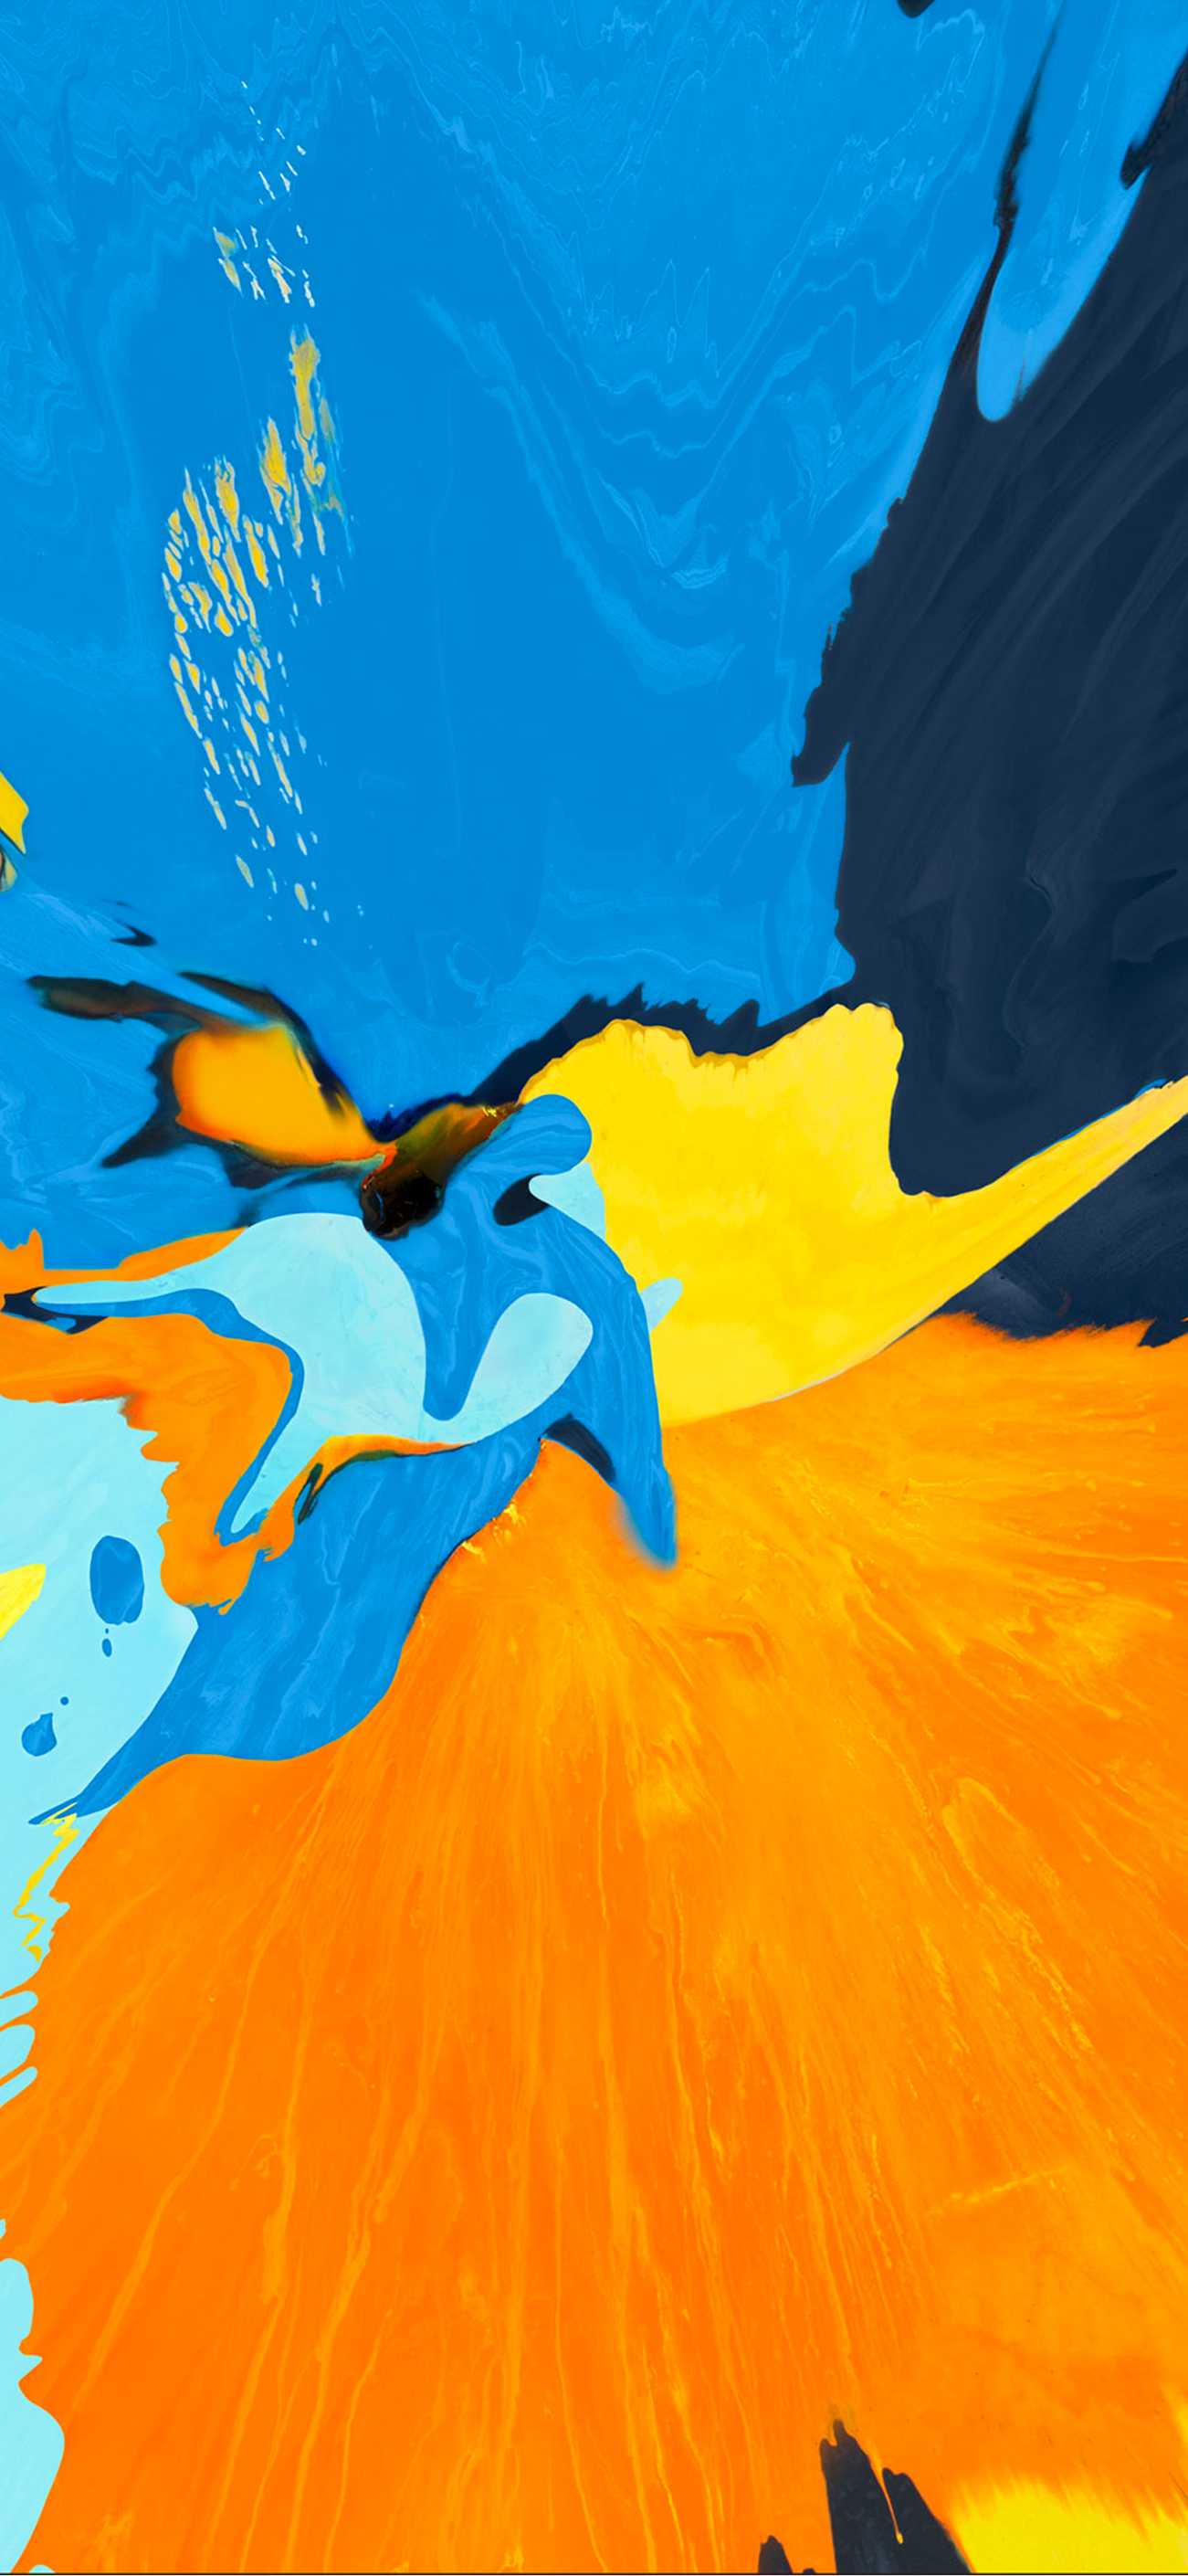 ipad pro wallpaper,blue,water,yellow,illustration,art